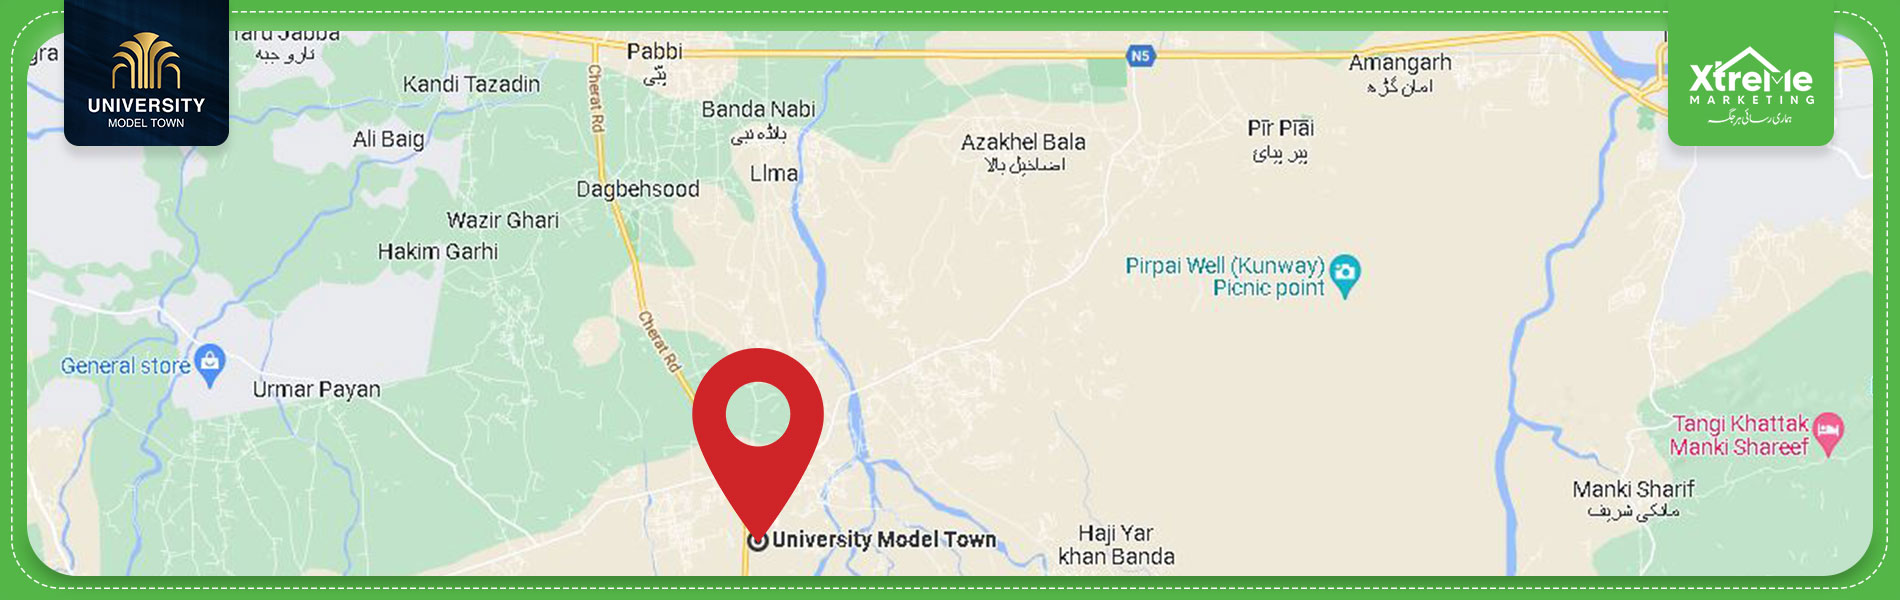 university-model-town-nowshera-location